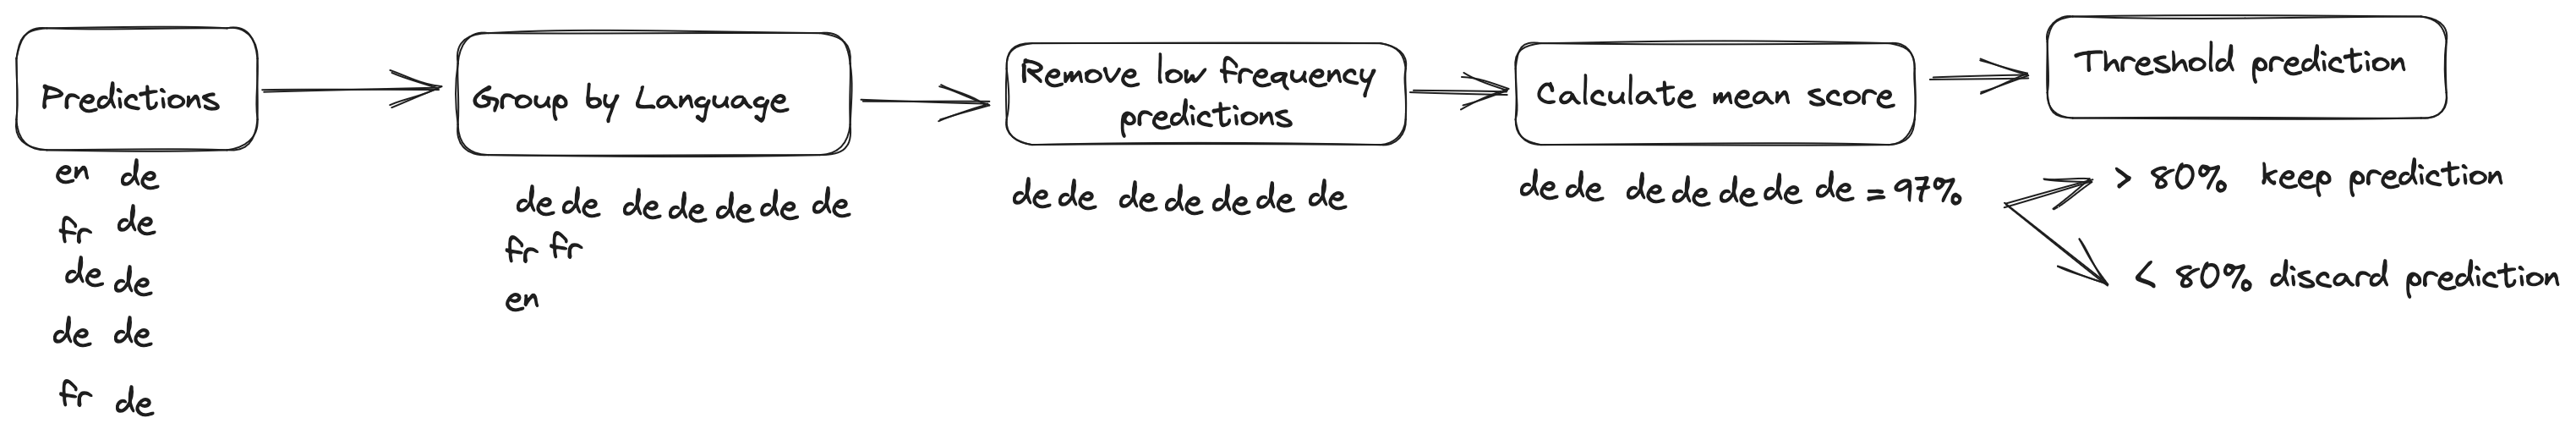 Prediction workflow